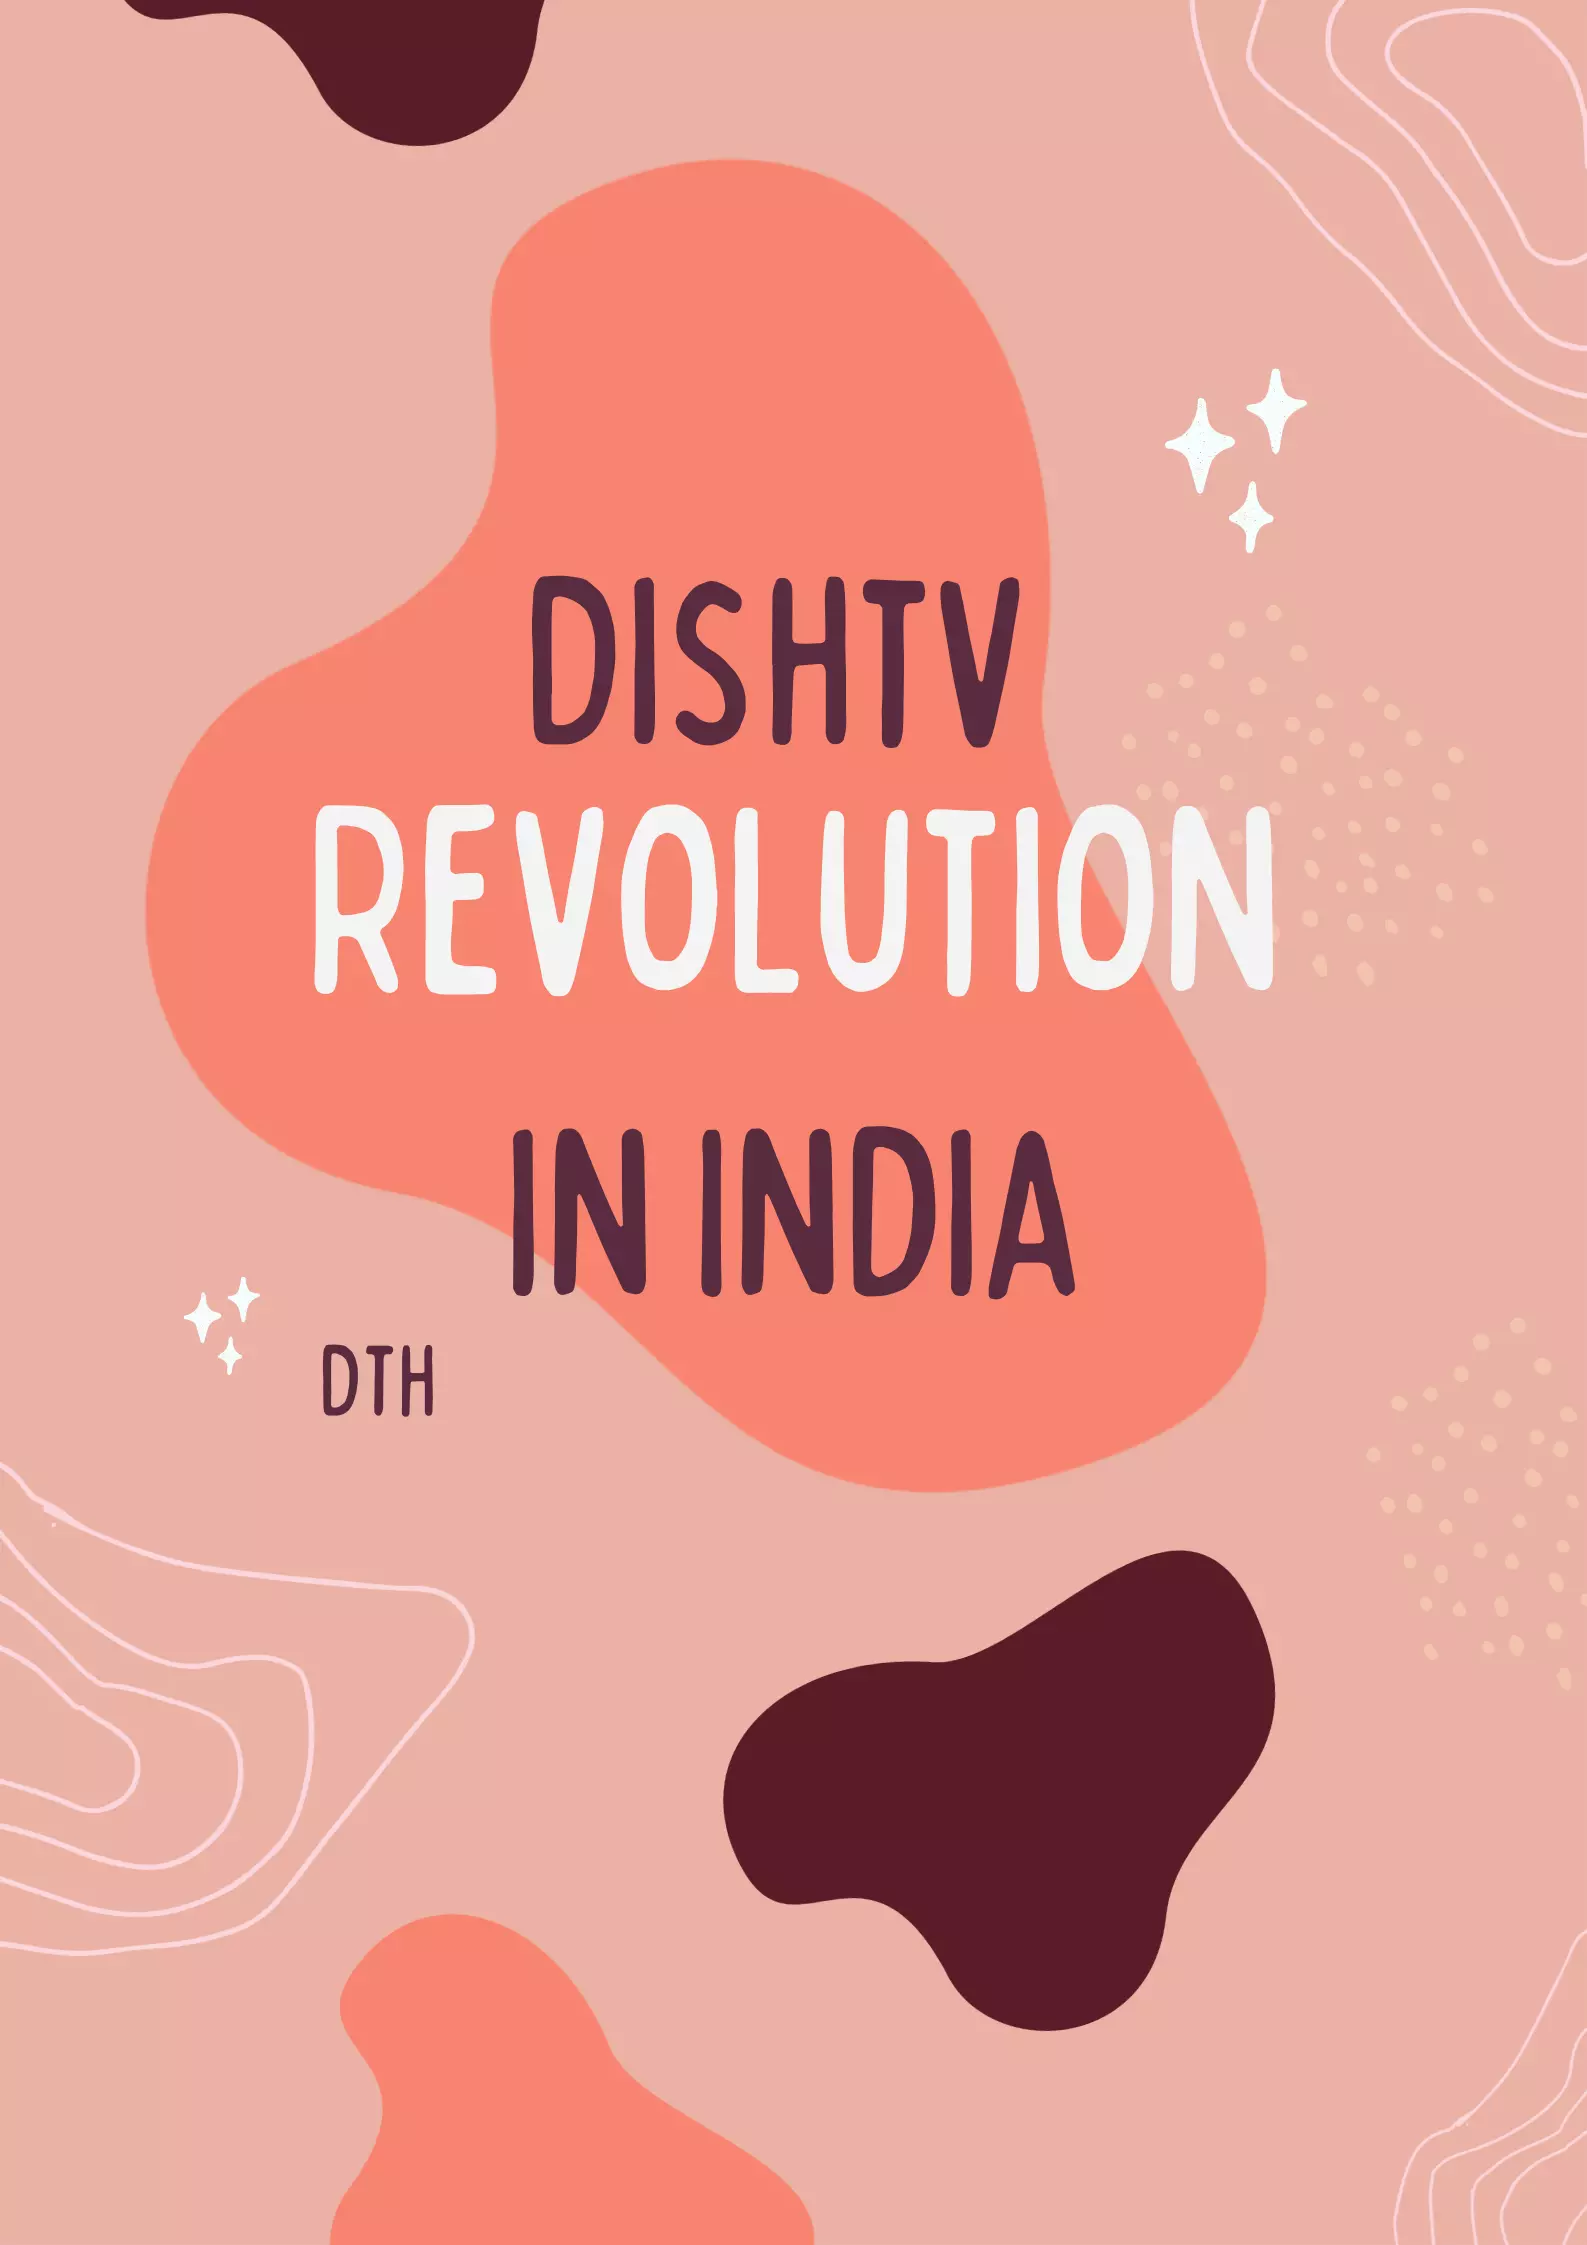 DishTV revolution in India